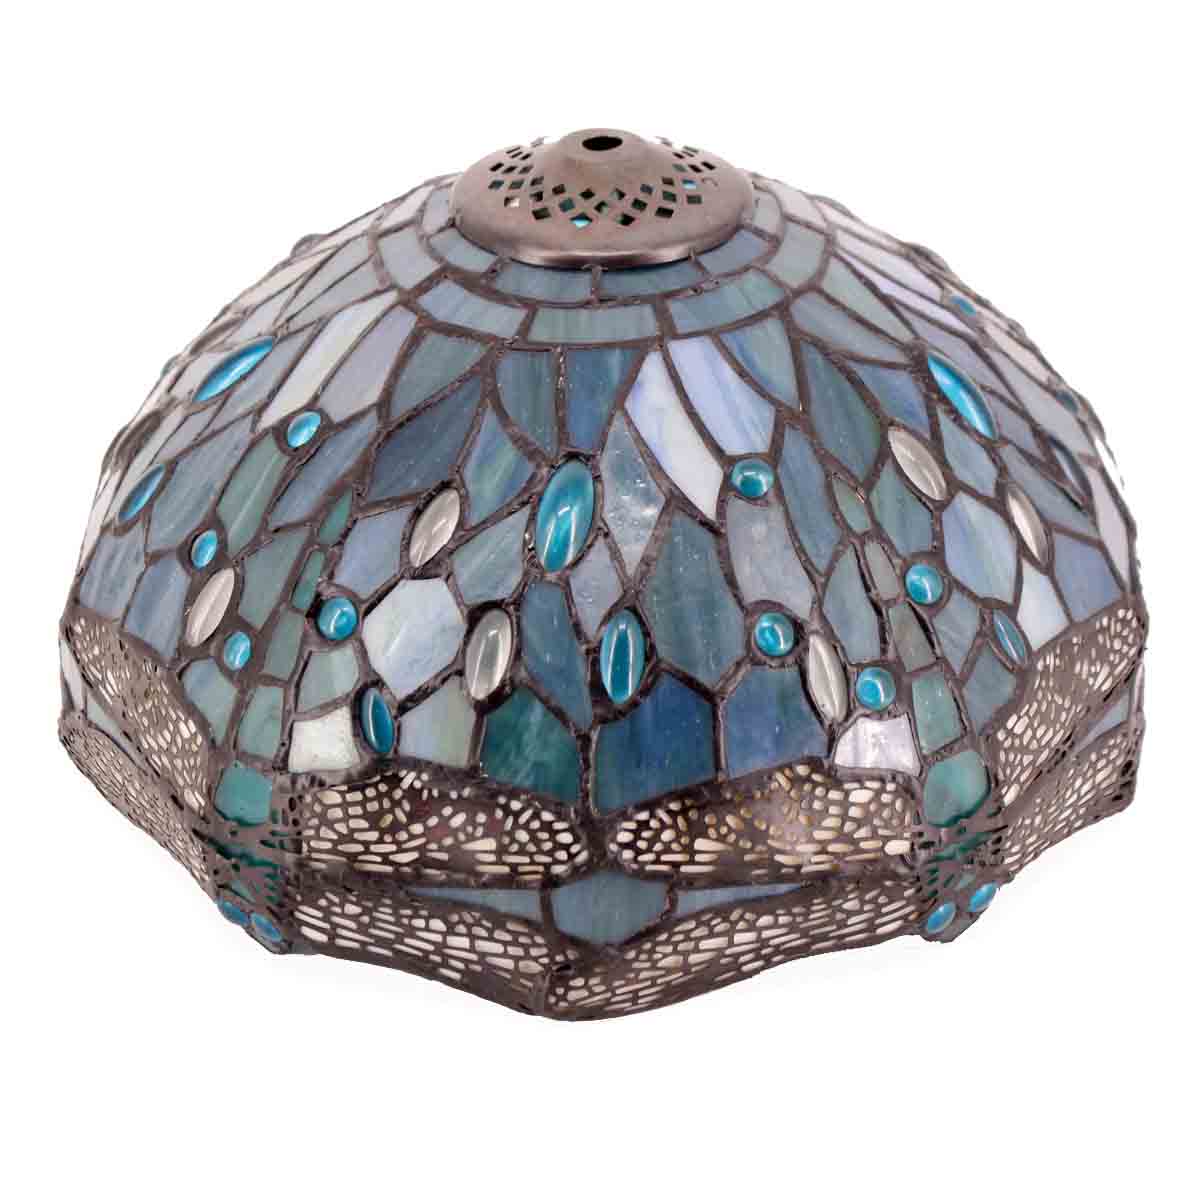 Werfactory® Tiffany Lamp Shade 12 Inch